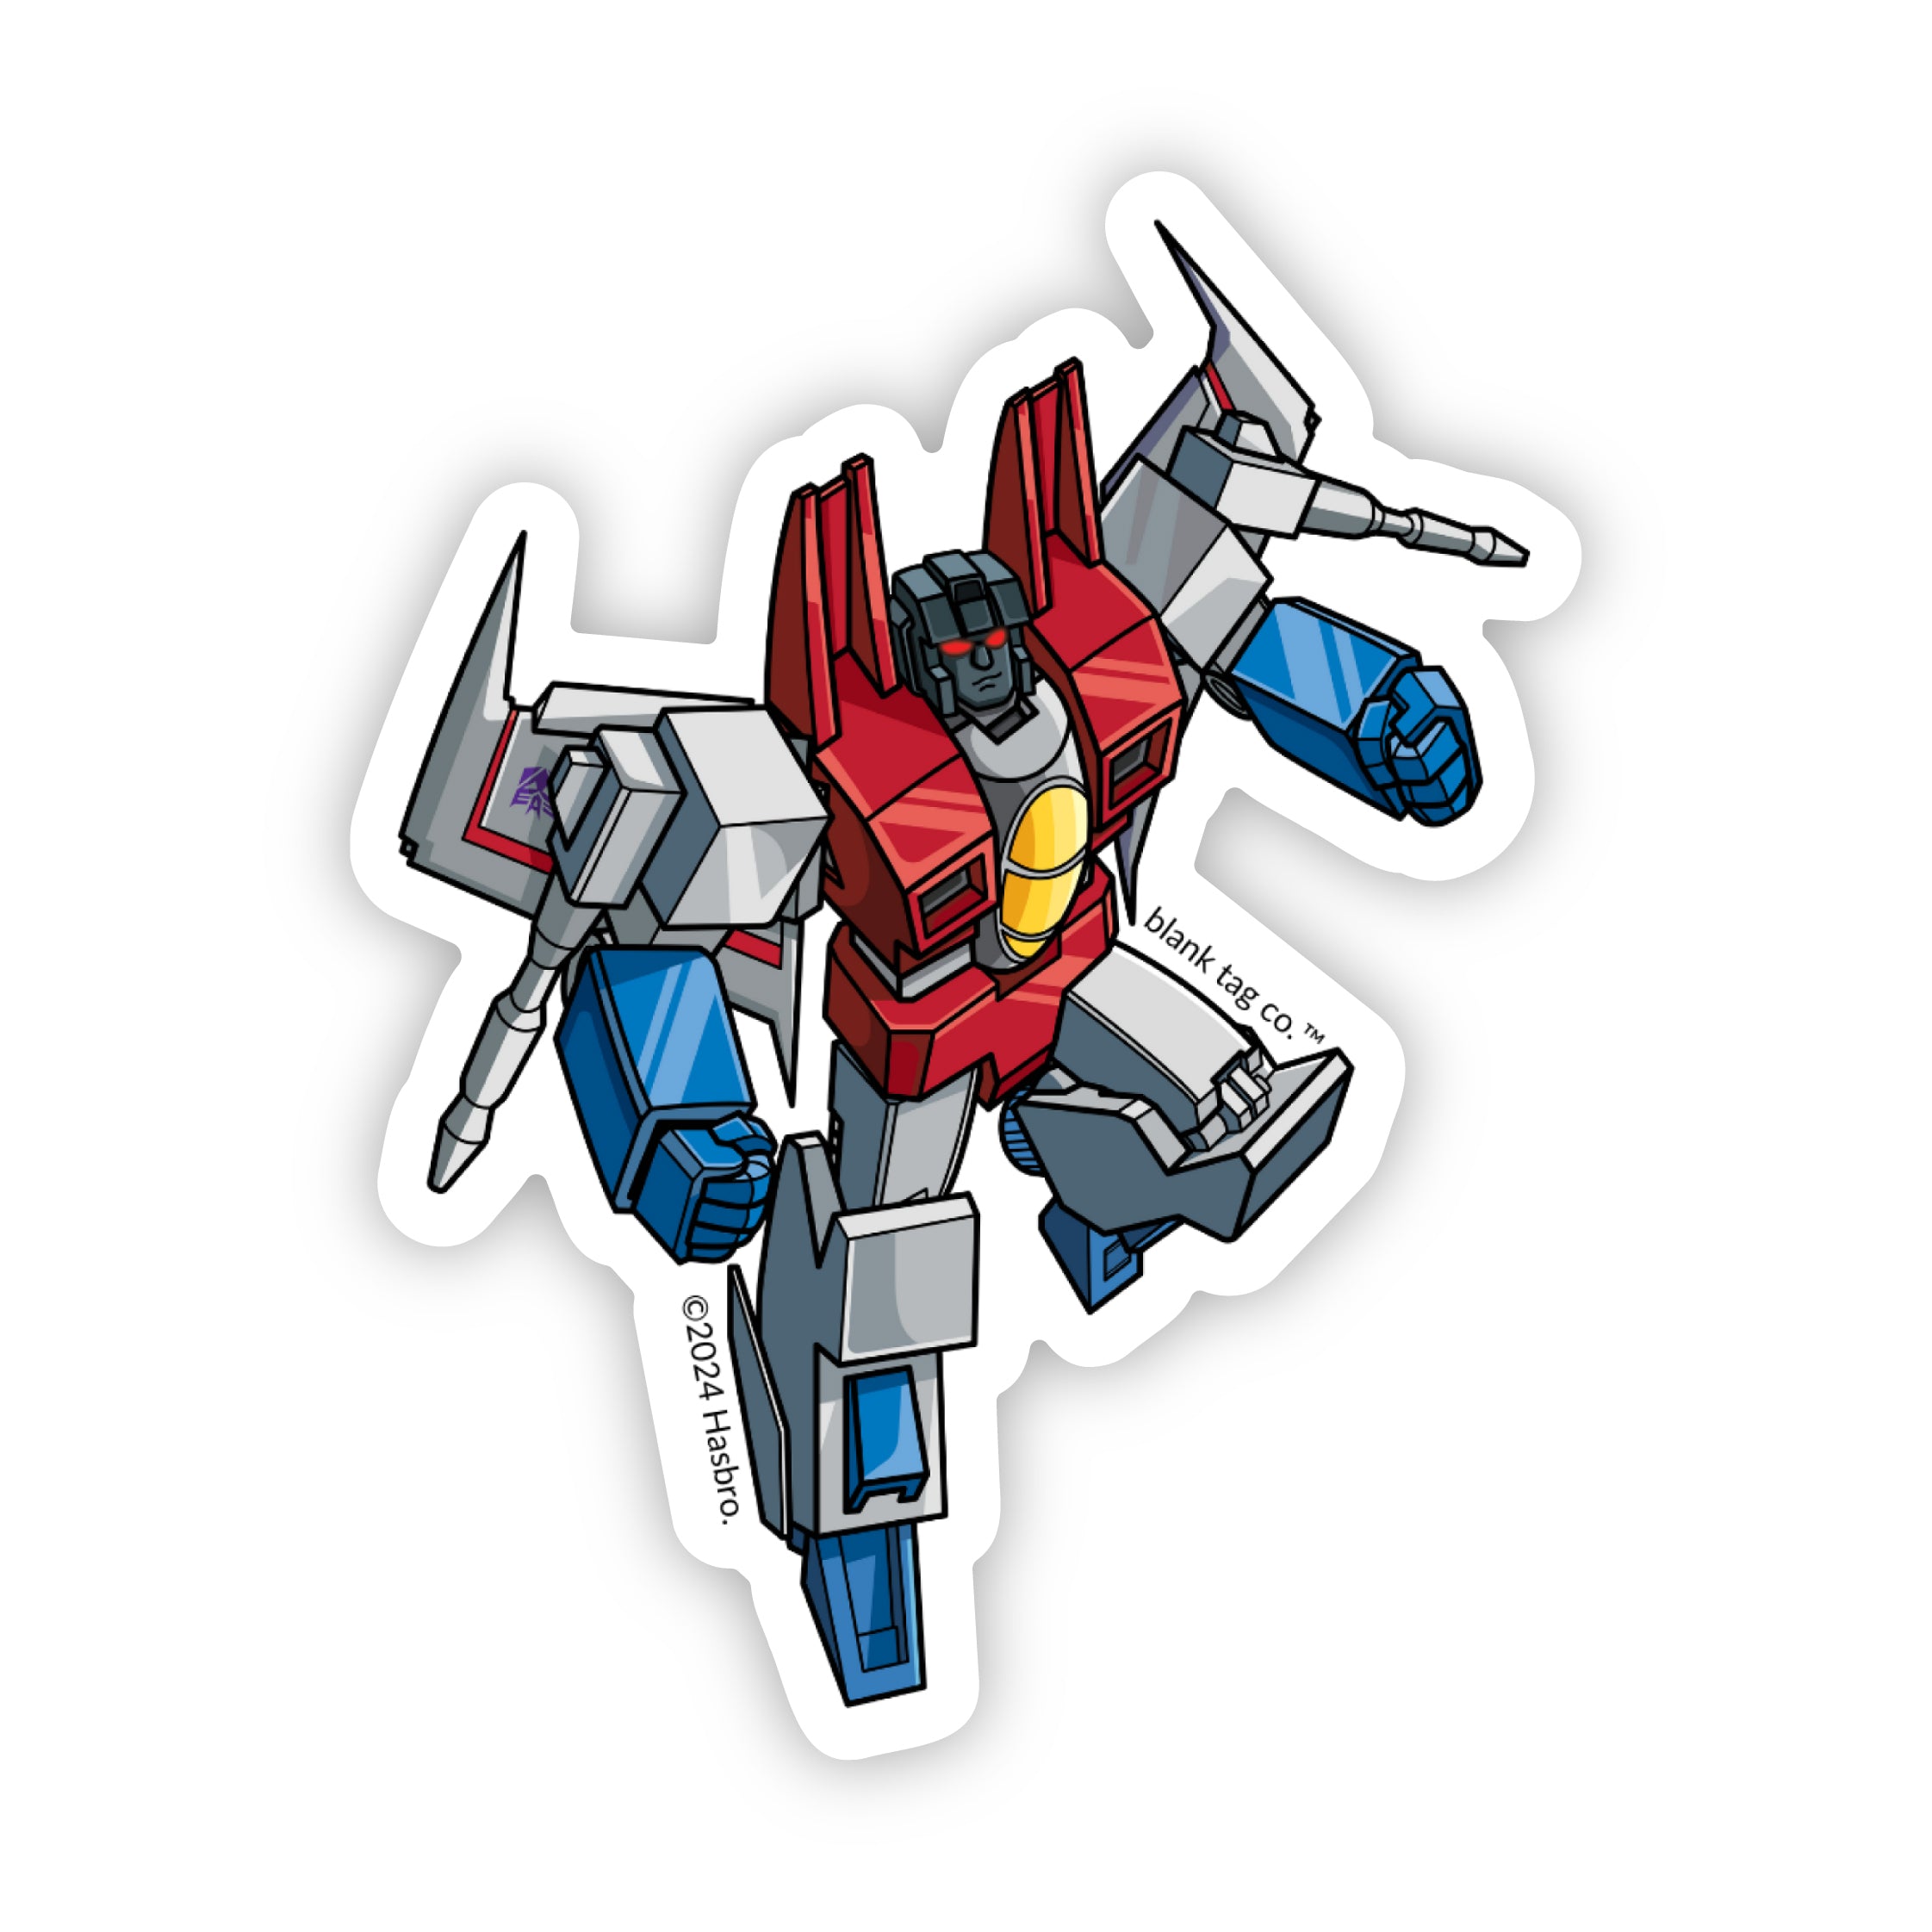 The Transformers Sticker Bundle